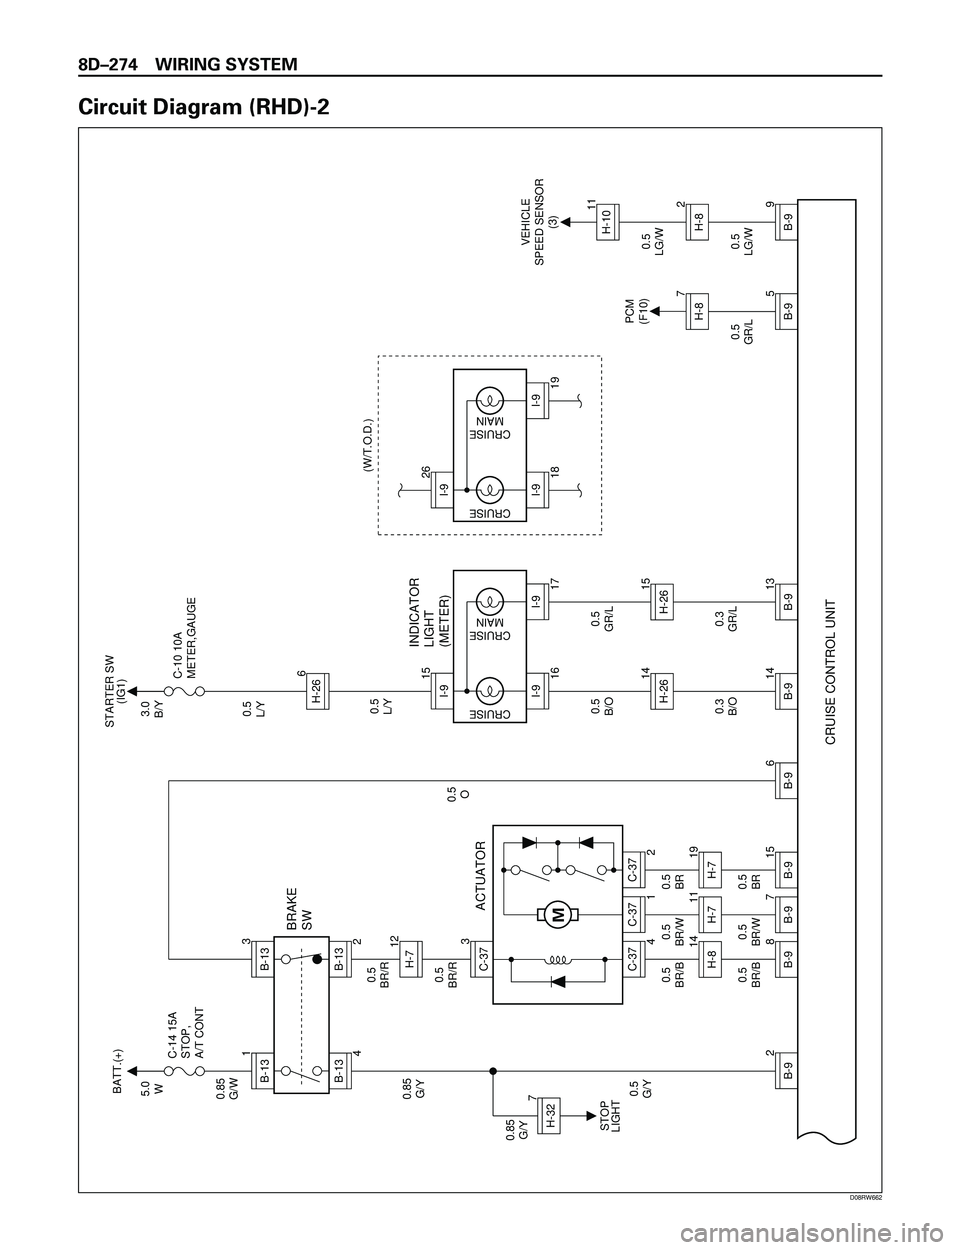 ISUZU TROOPER 1998  Service Owners Guide 8DÐ274 WIRING SYSTEM
Circuit Diagram (RHD)-2
0.5
O
0.5
BR/B0.5
BR/R0.5
BR/R
0.5
BR/B 5.0
W
0.85
G/W
0.85
G/Y
0.5
G/Y 0.85
G/YC-14 15A
STOP,
A/T CONT
ACTUATOR BRAKE
SW
INDICATOR
LIGHT
(METER)
CRUISE C